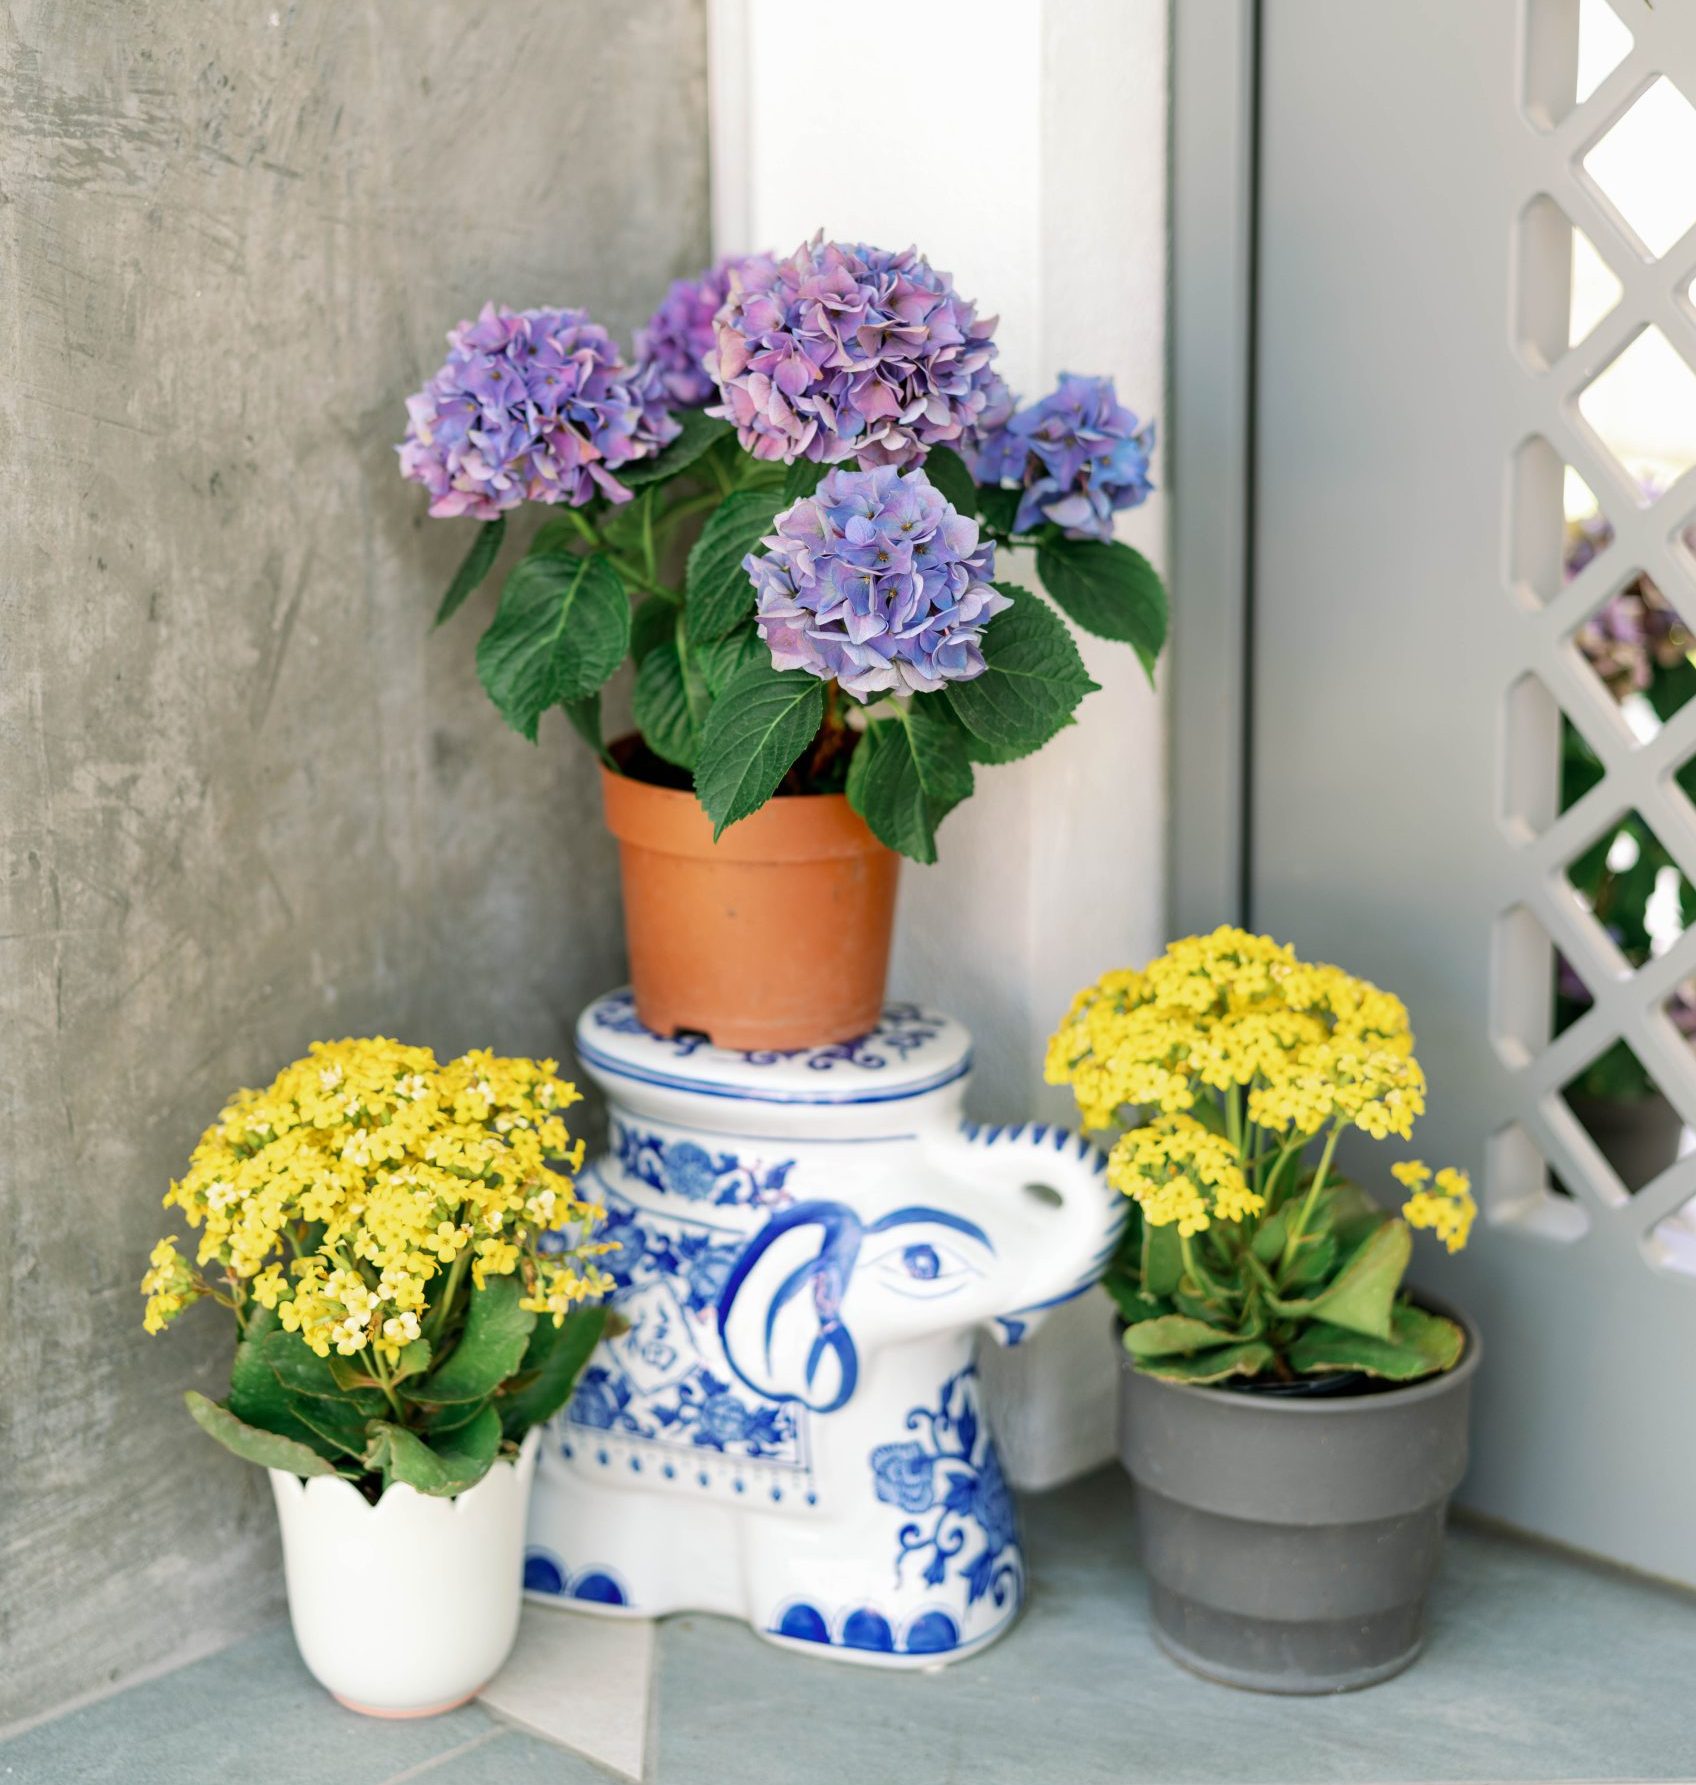 Flowers in various pots at a front door